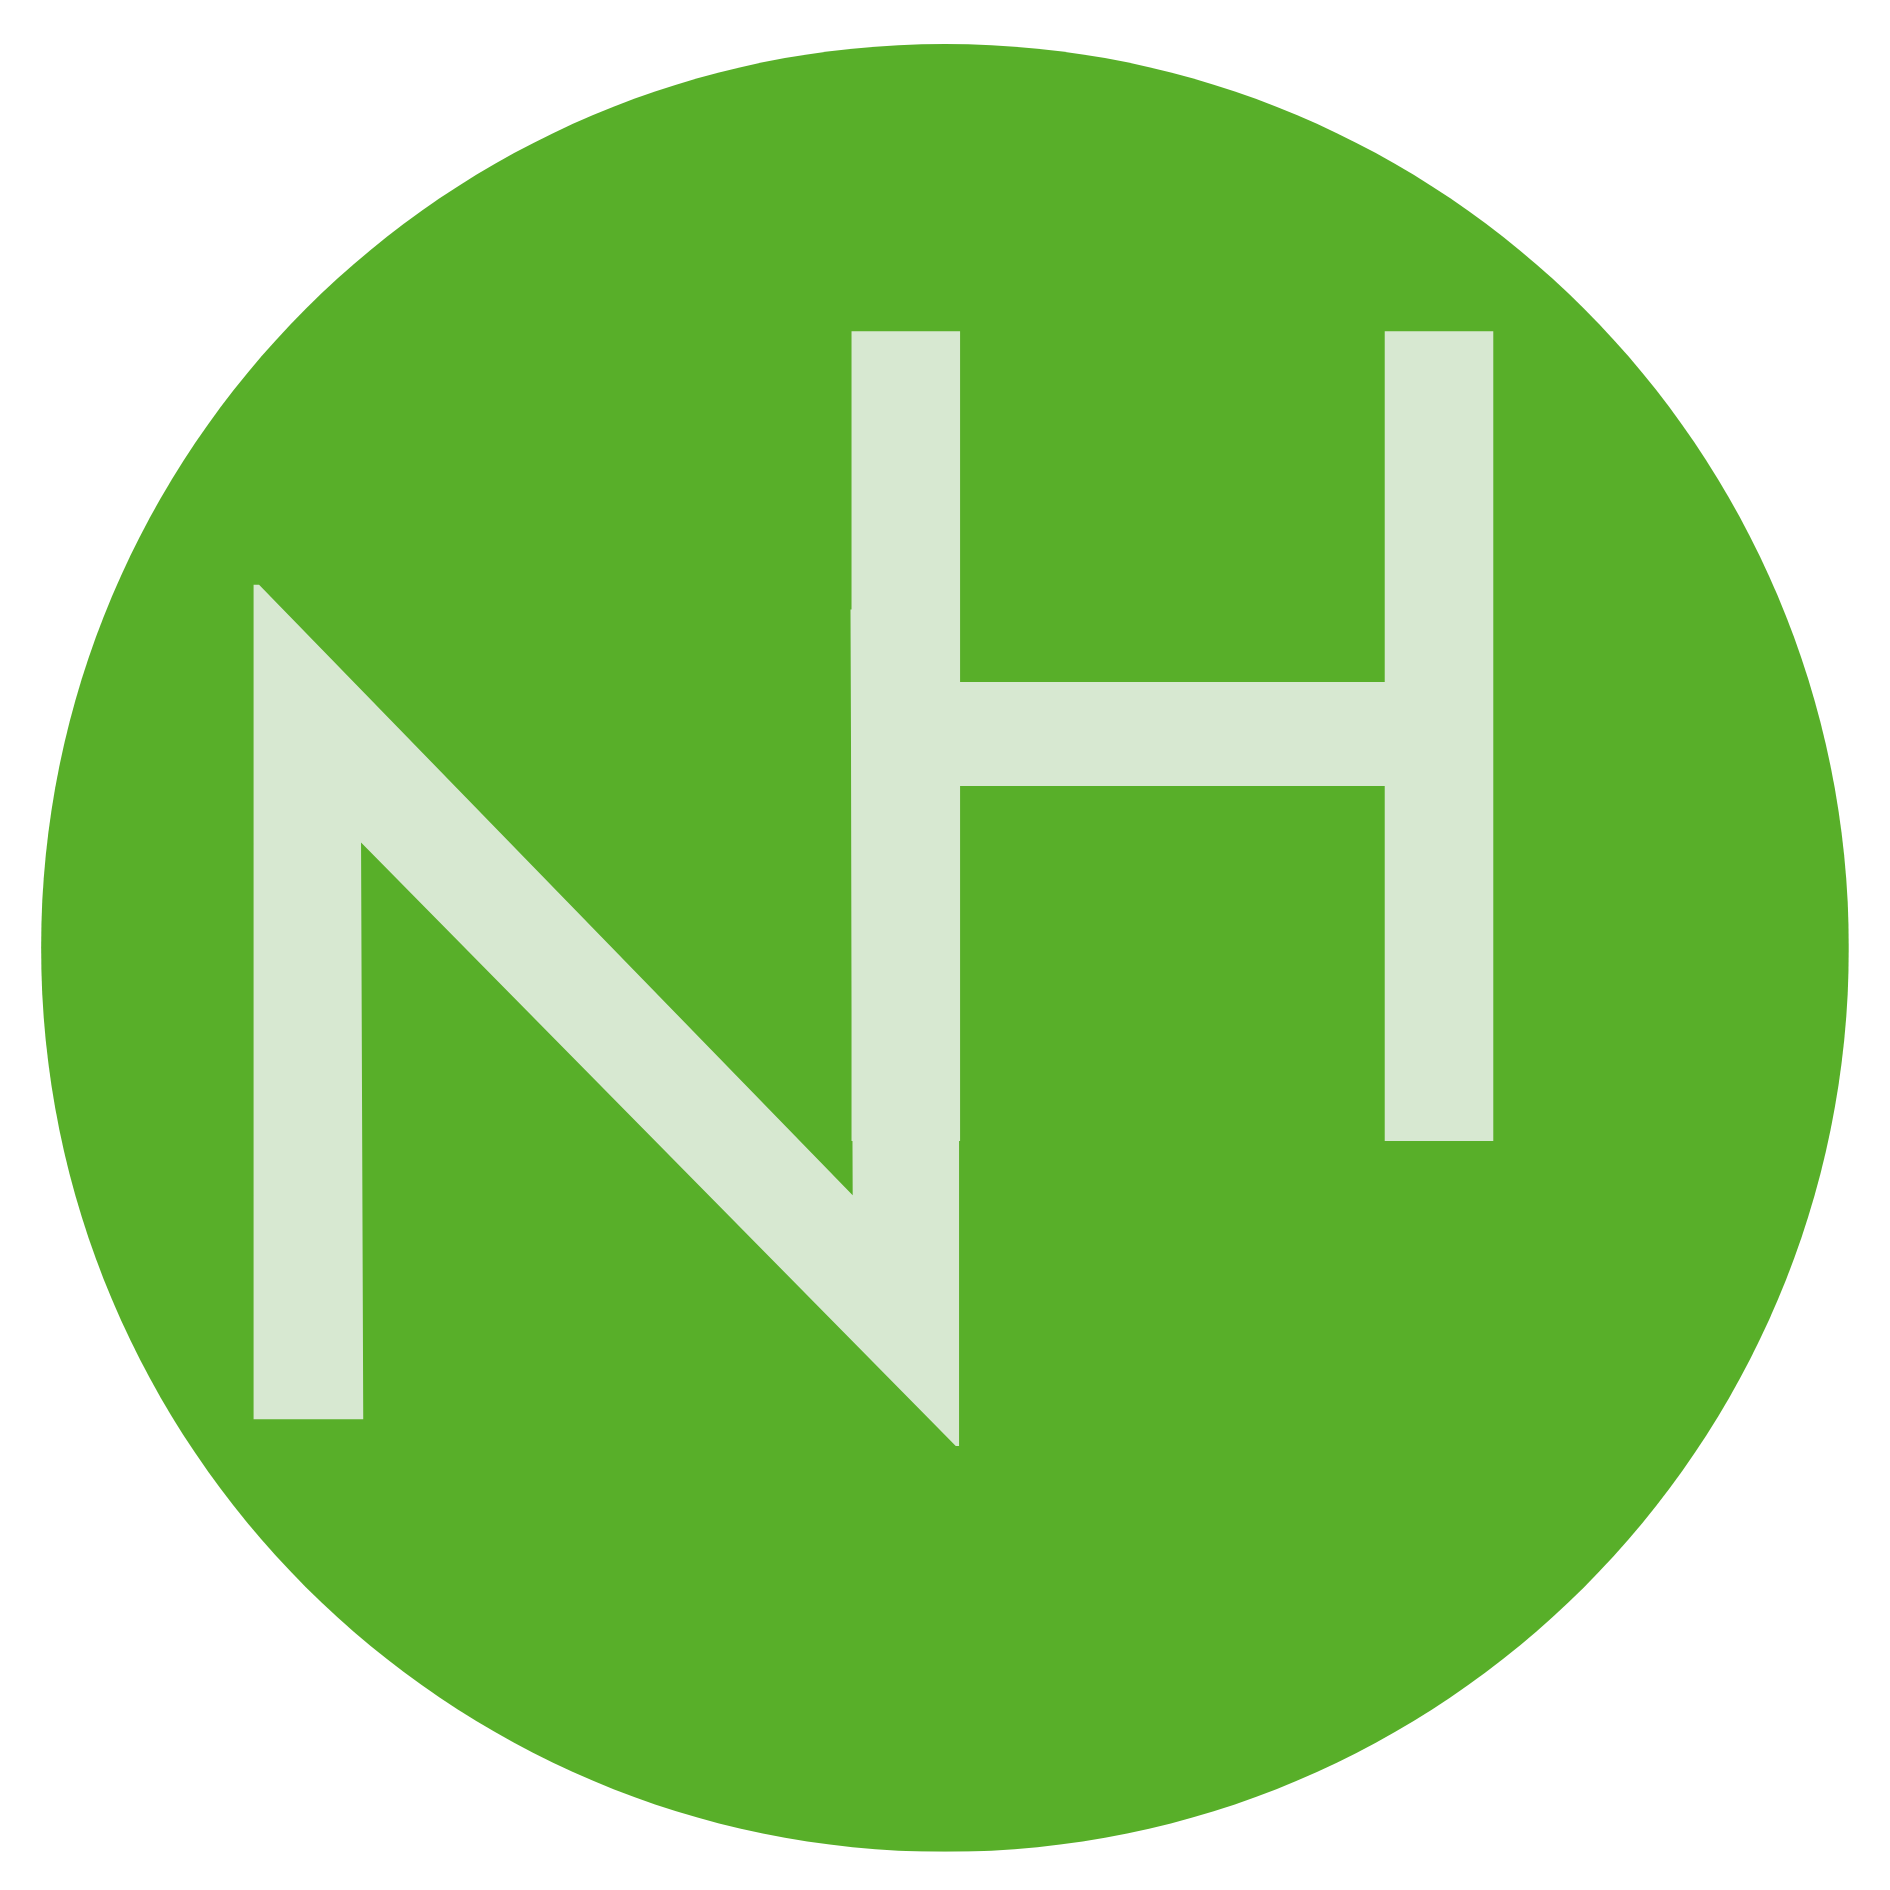 N H Corp